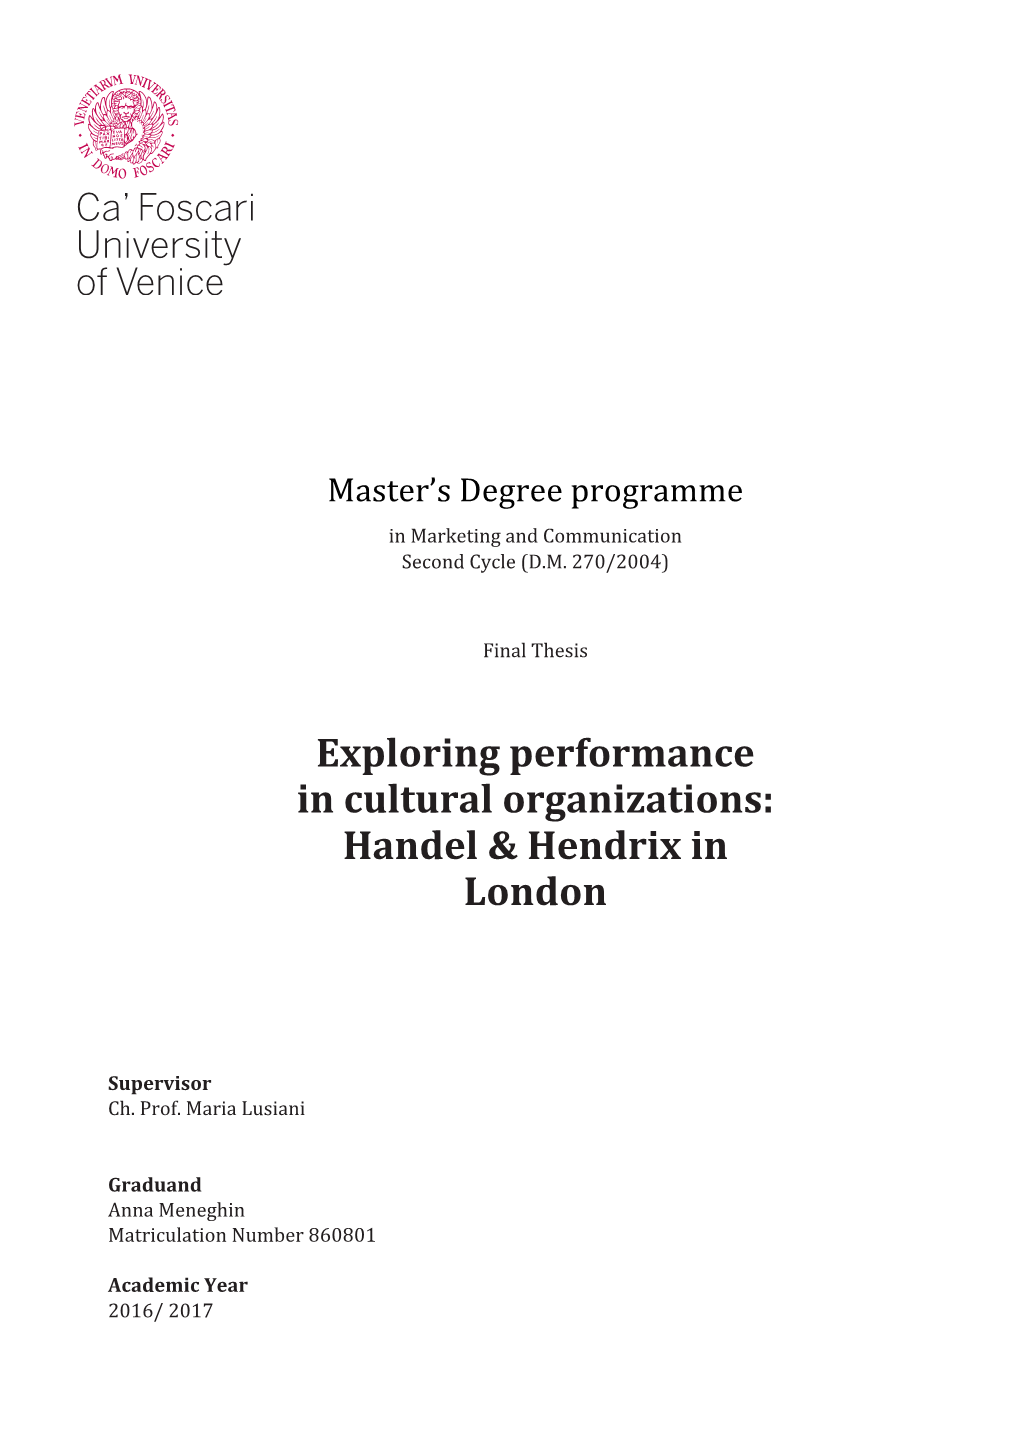 Exploring Performance in Cultural Organizations: Handel & Hendrix In